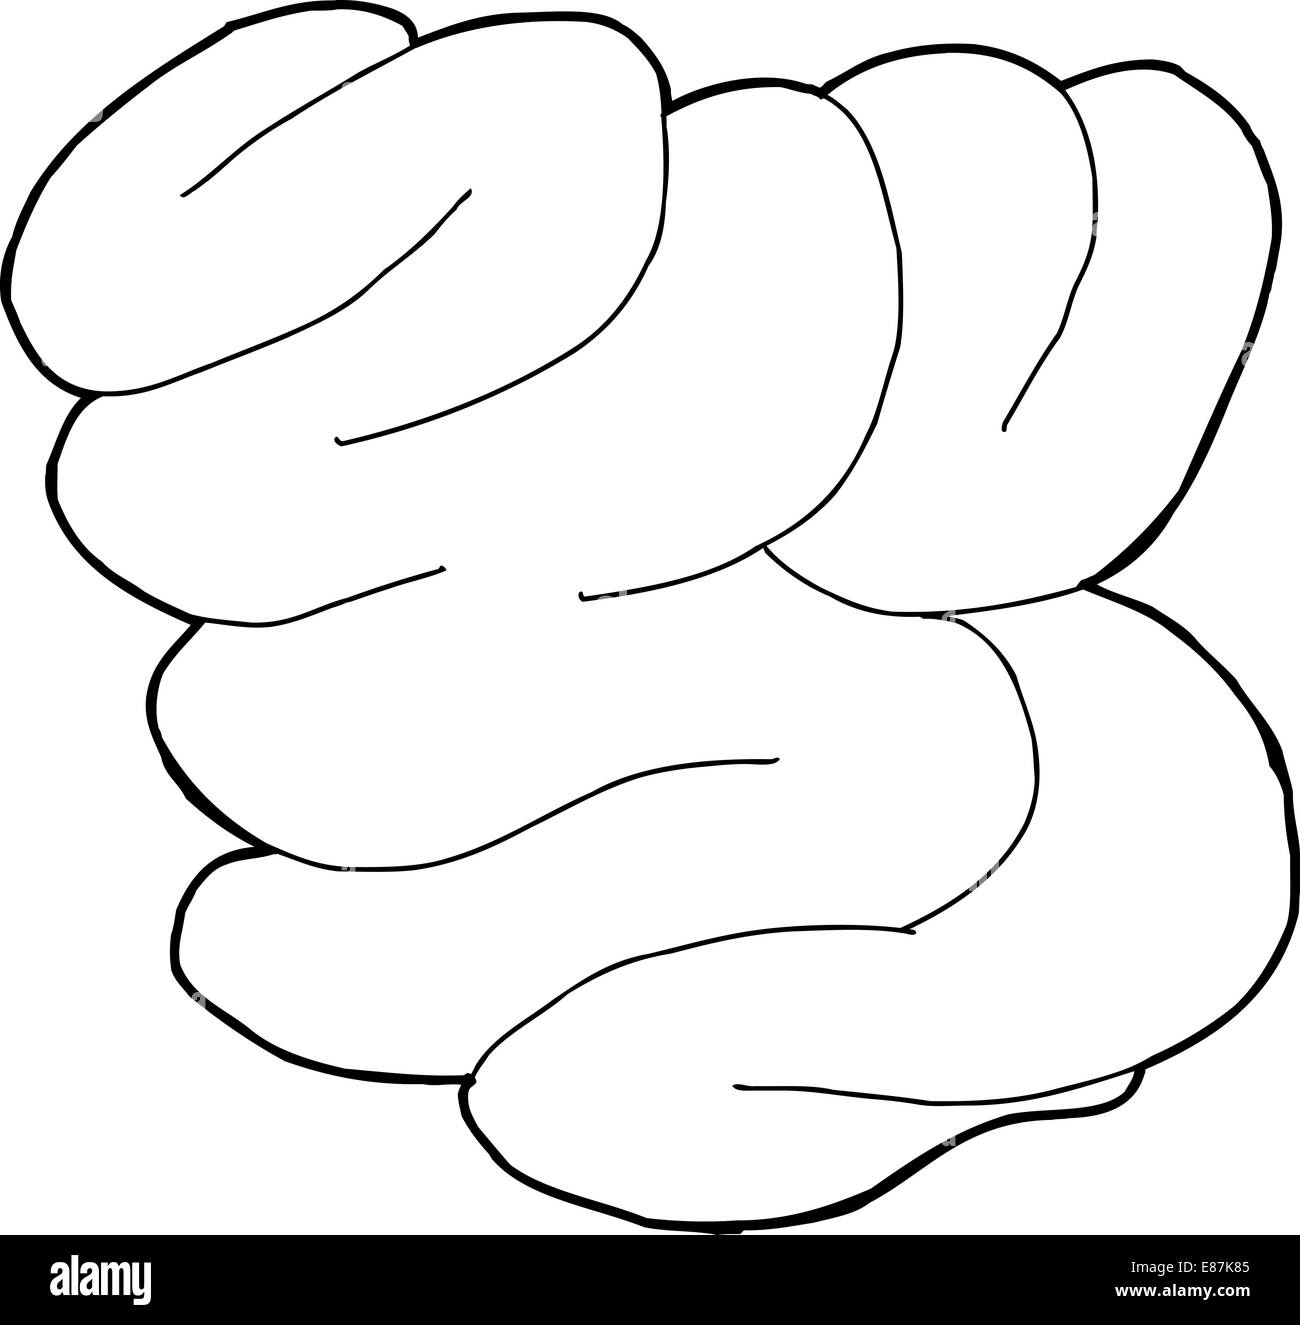 Disegnata a mano intestino umano cartoon contorno Foto Stock